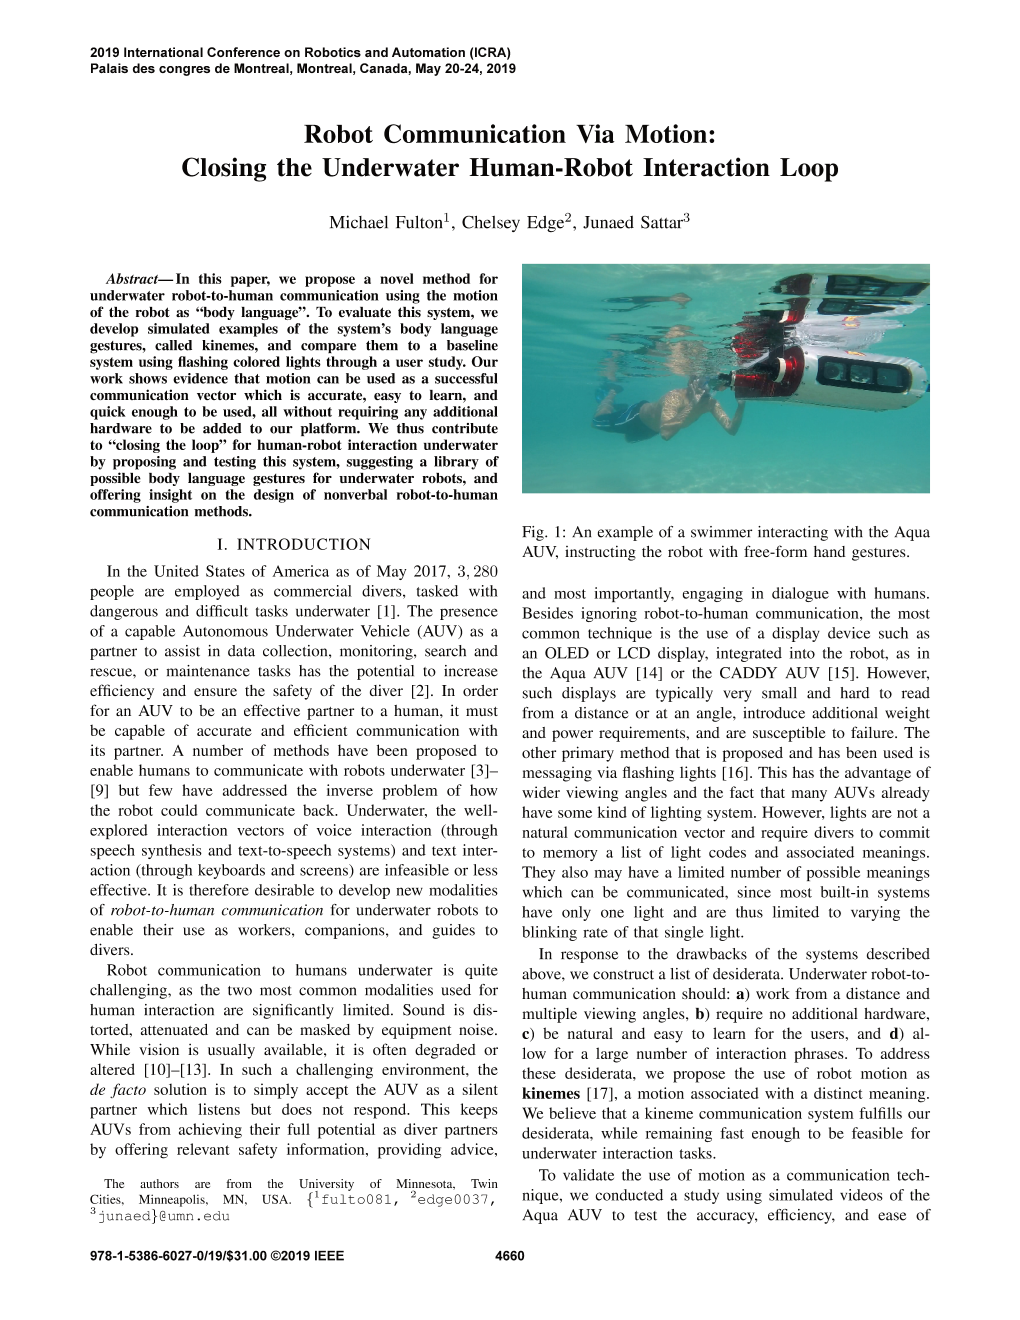 Closing the Human-Robot Interaction Loop Underwater